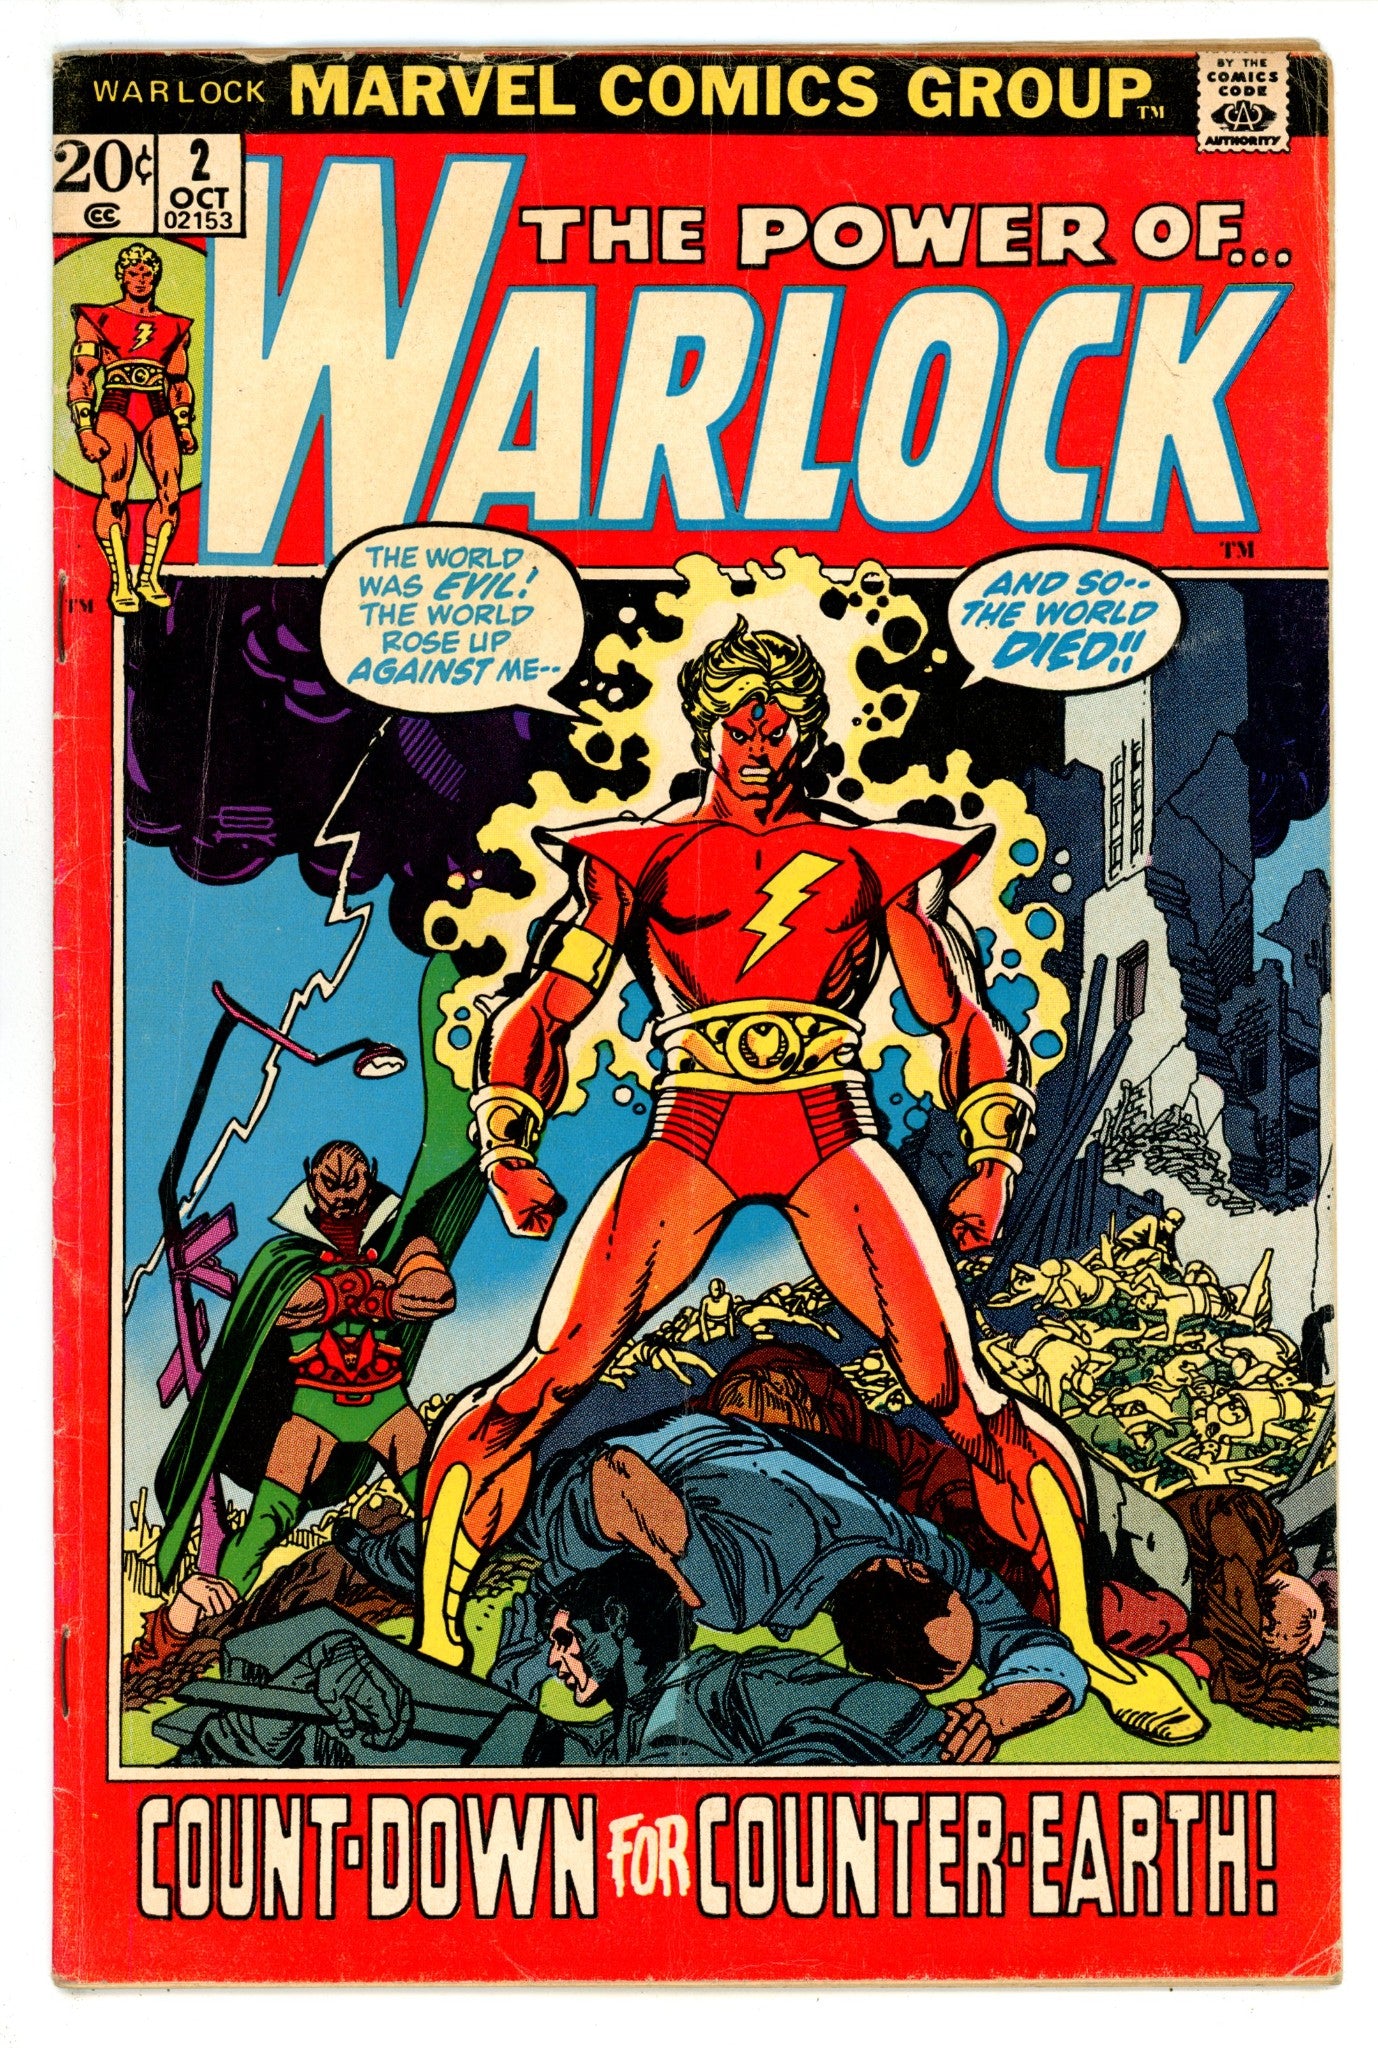 Warlock Vol 1 2 VG (4.0) (1972) 